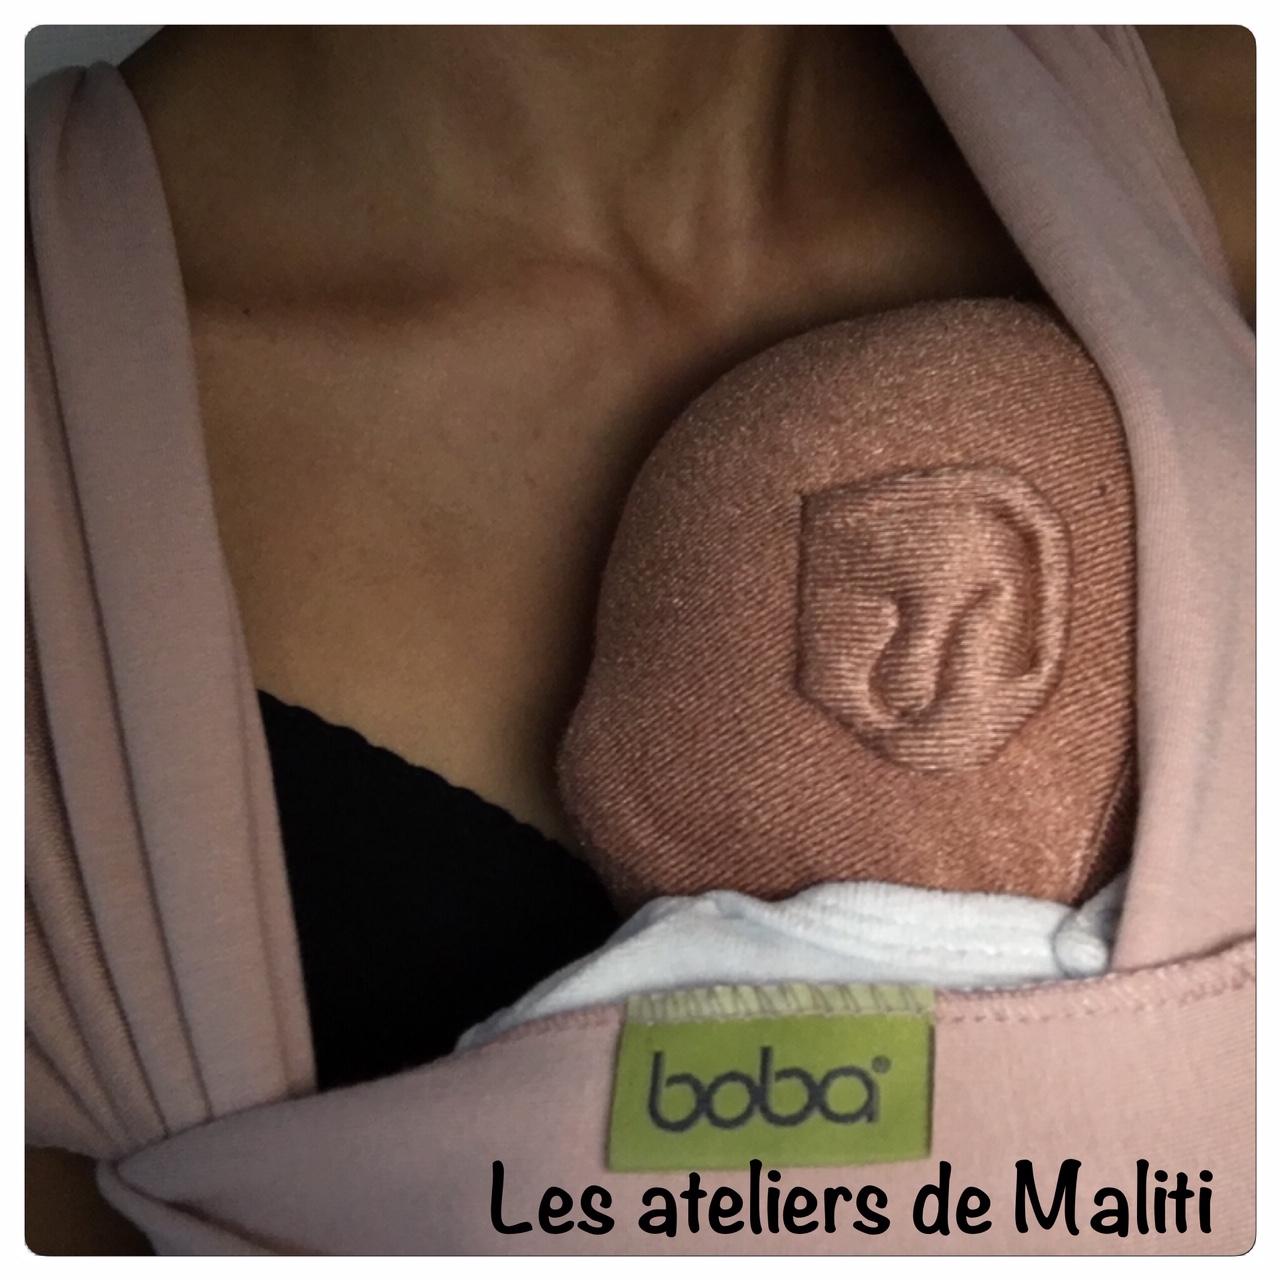 l'écharpe de peau à peau de Néobulle - Les ateliers de Maliti